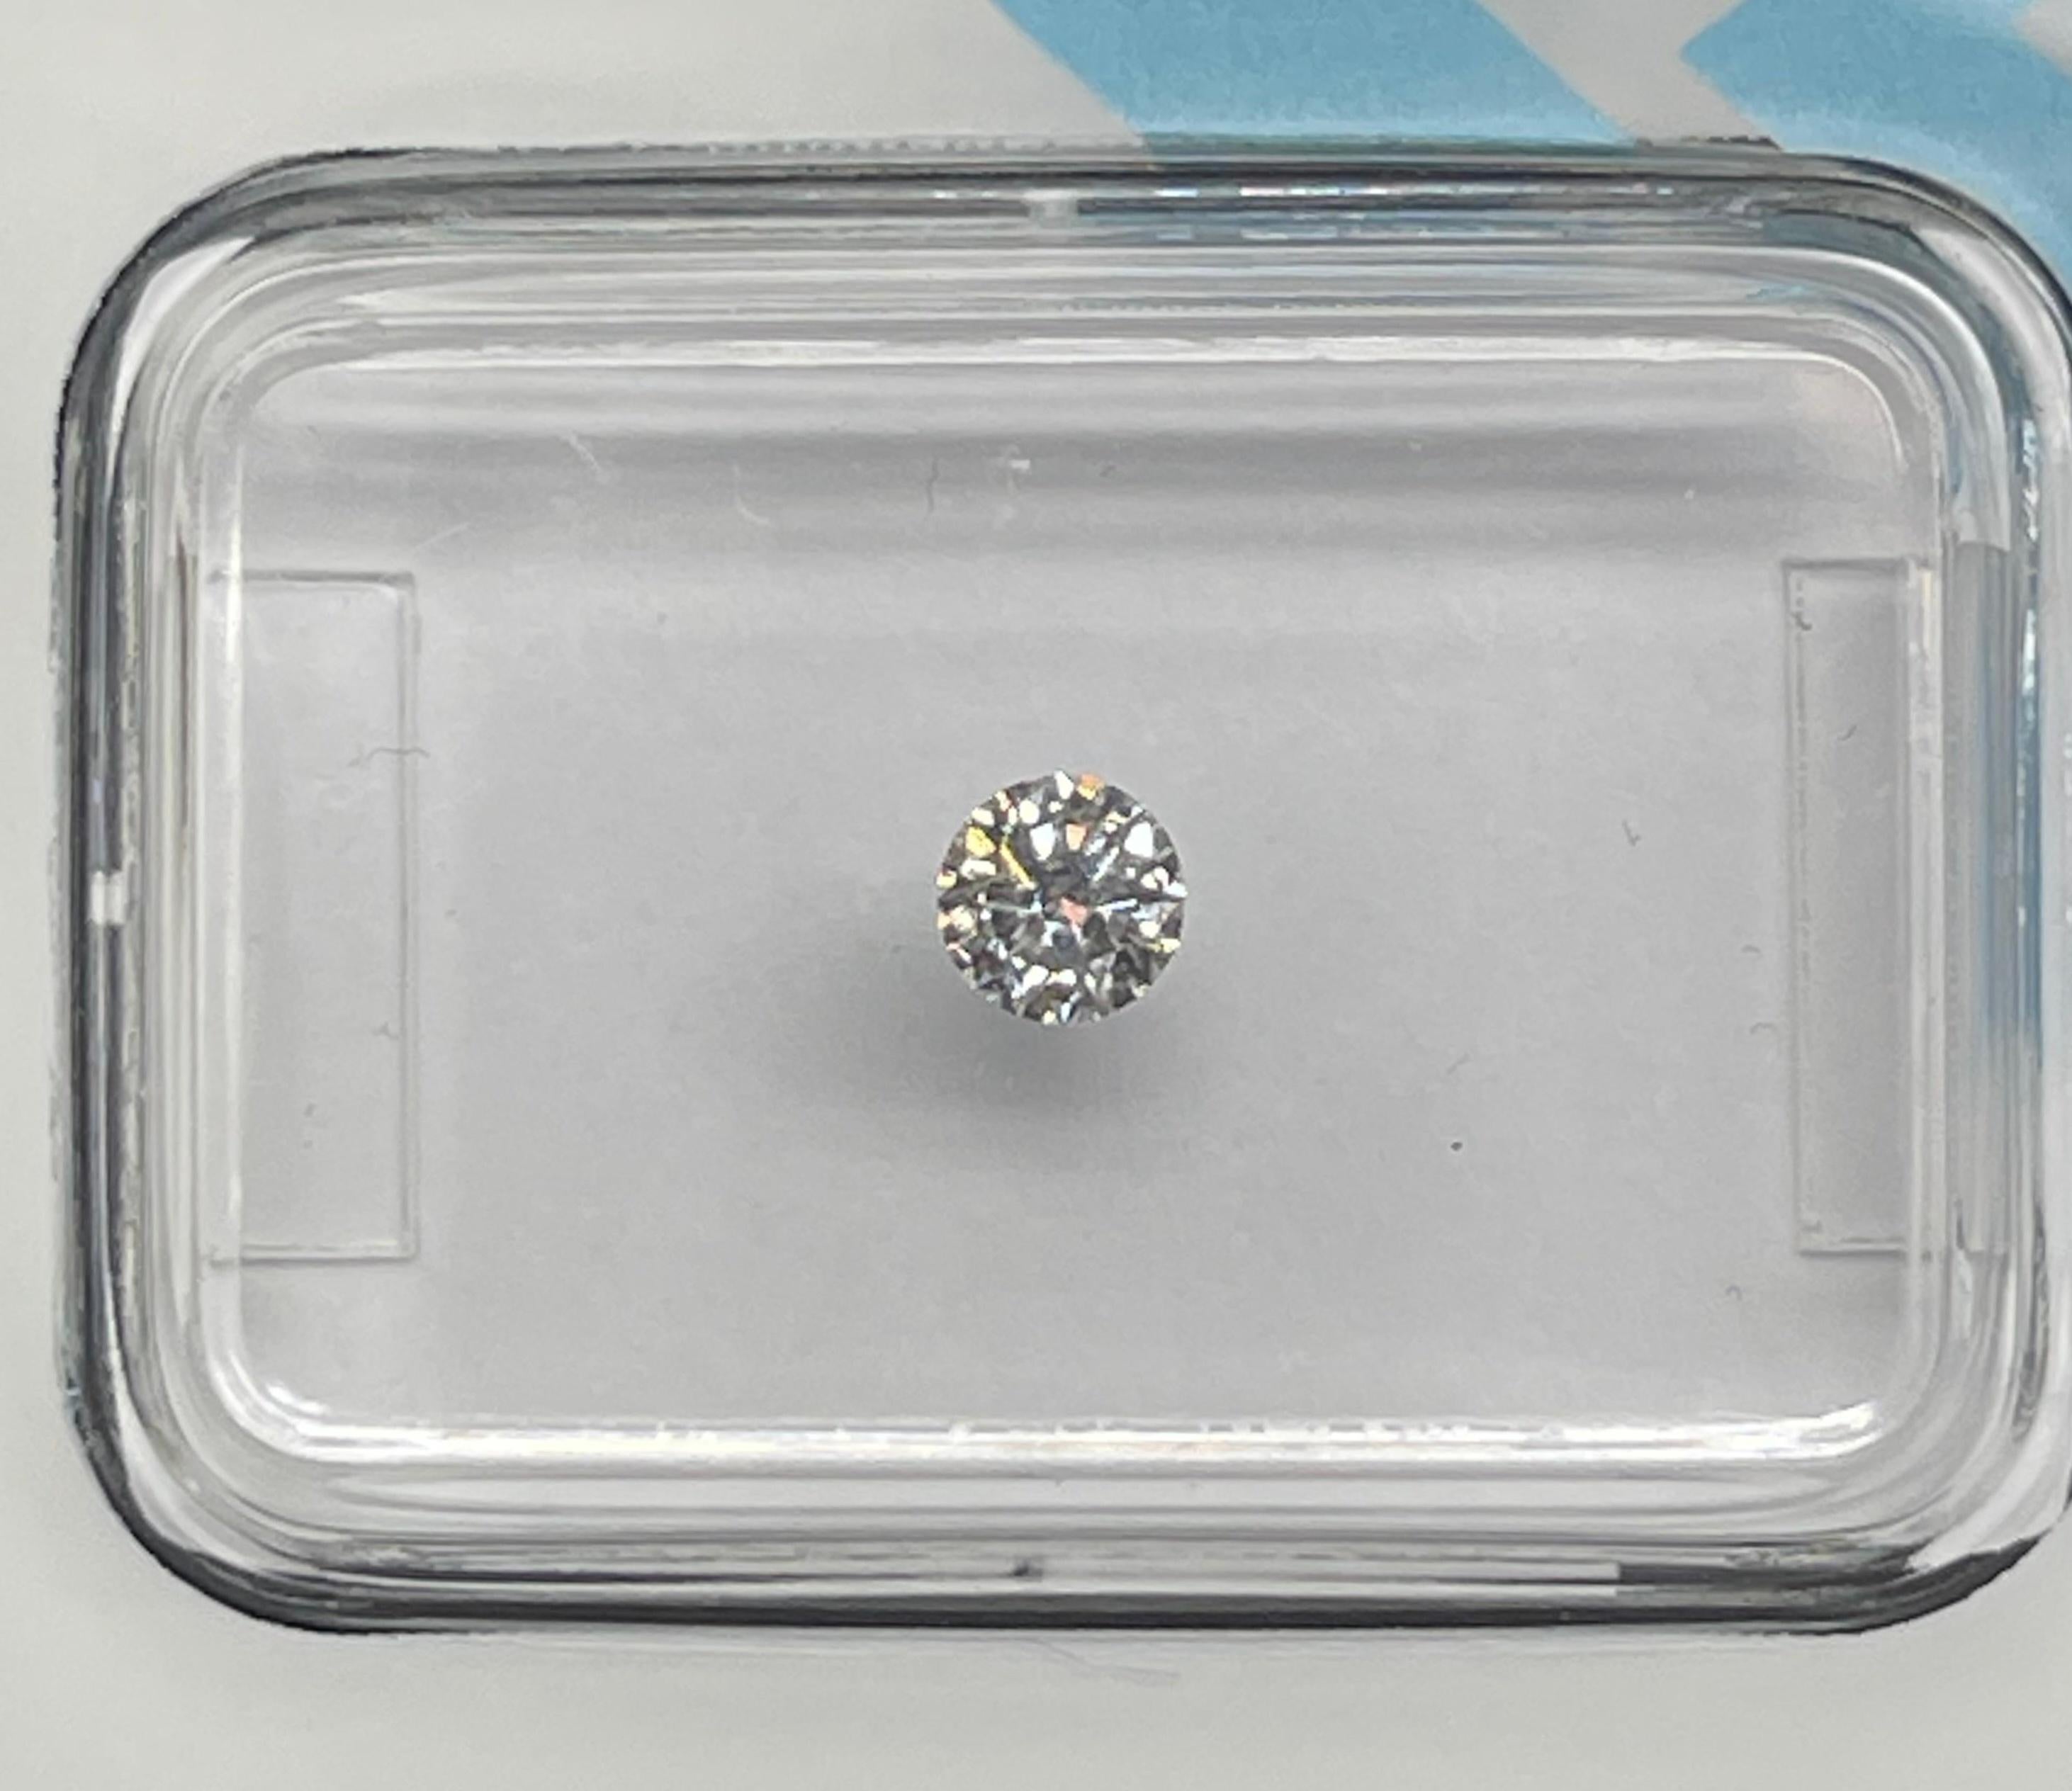 Natural Diamond graded by IGI.

Shape: Round Brilliant
Weight: 0.17 CT
Color: D
Clarity: VVS2
Cut: Very Good
Polish: Very Good
Symmetry: Excellent
Fluorescence: None
Laser inscription : IGI 630434201